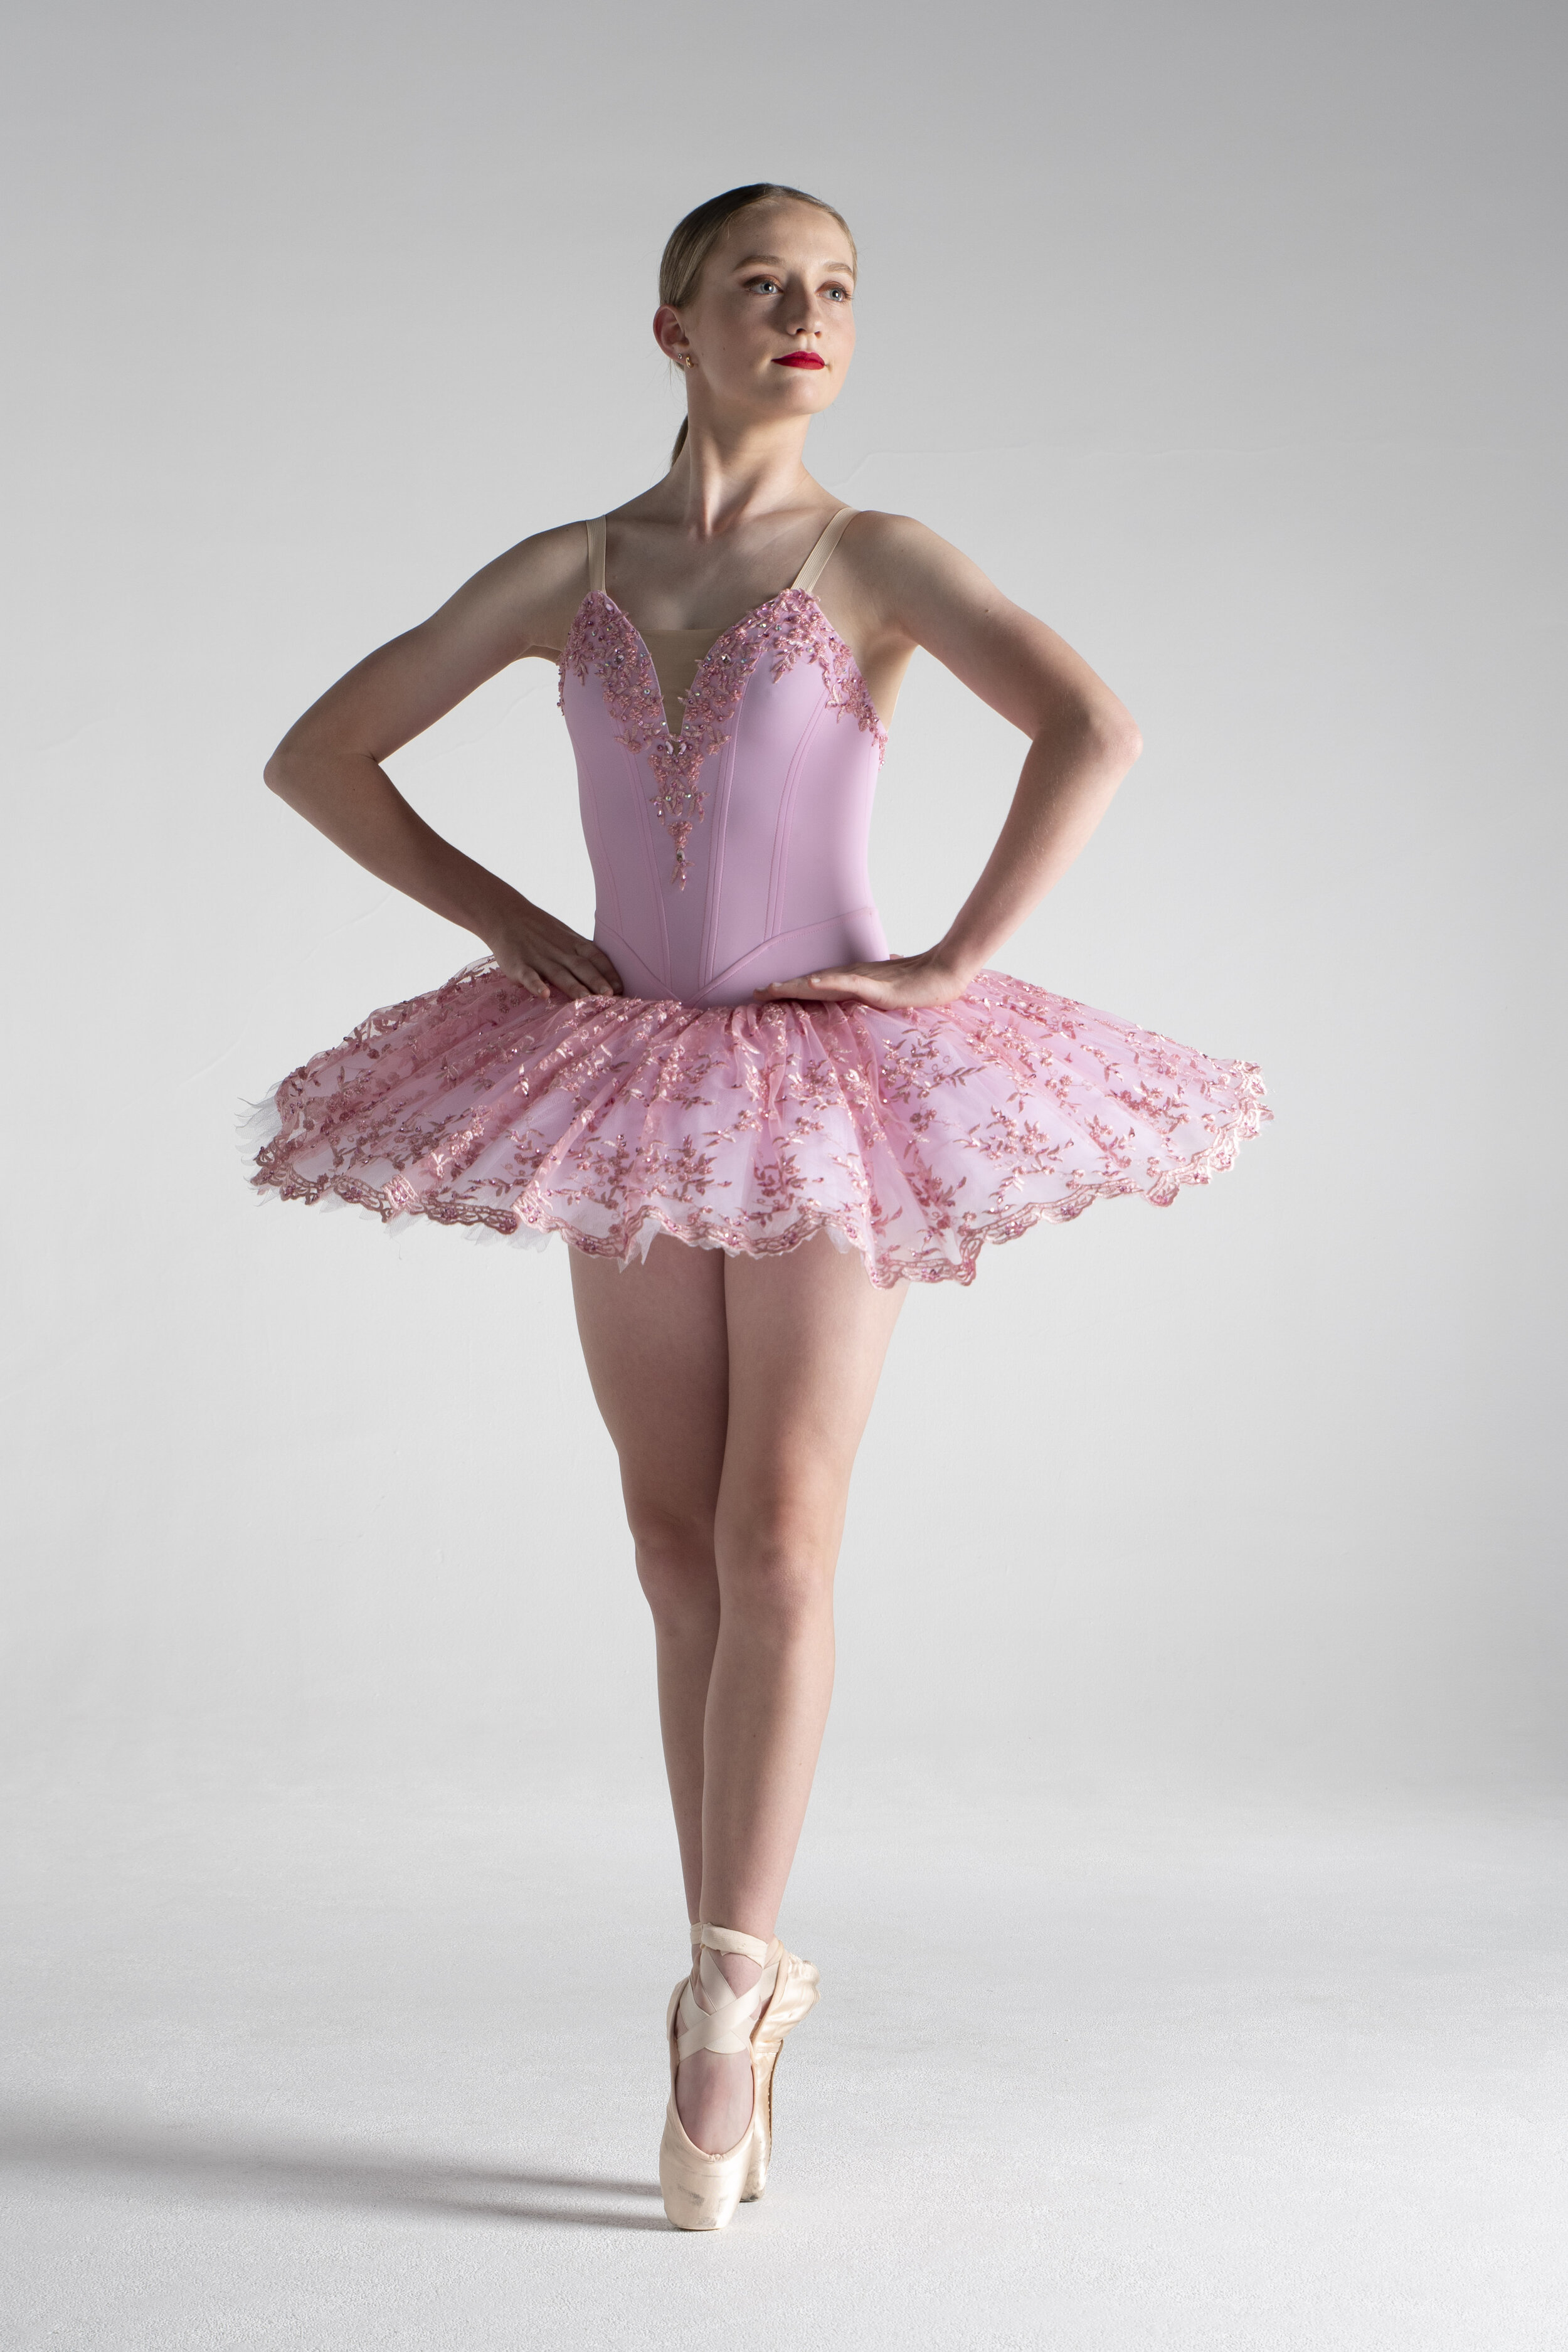 Ballerina posing in Canberra - dance photography